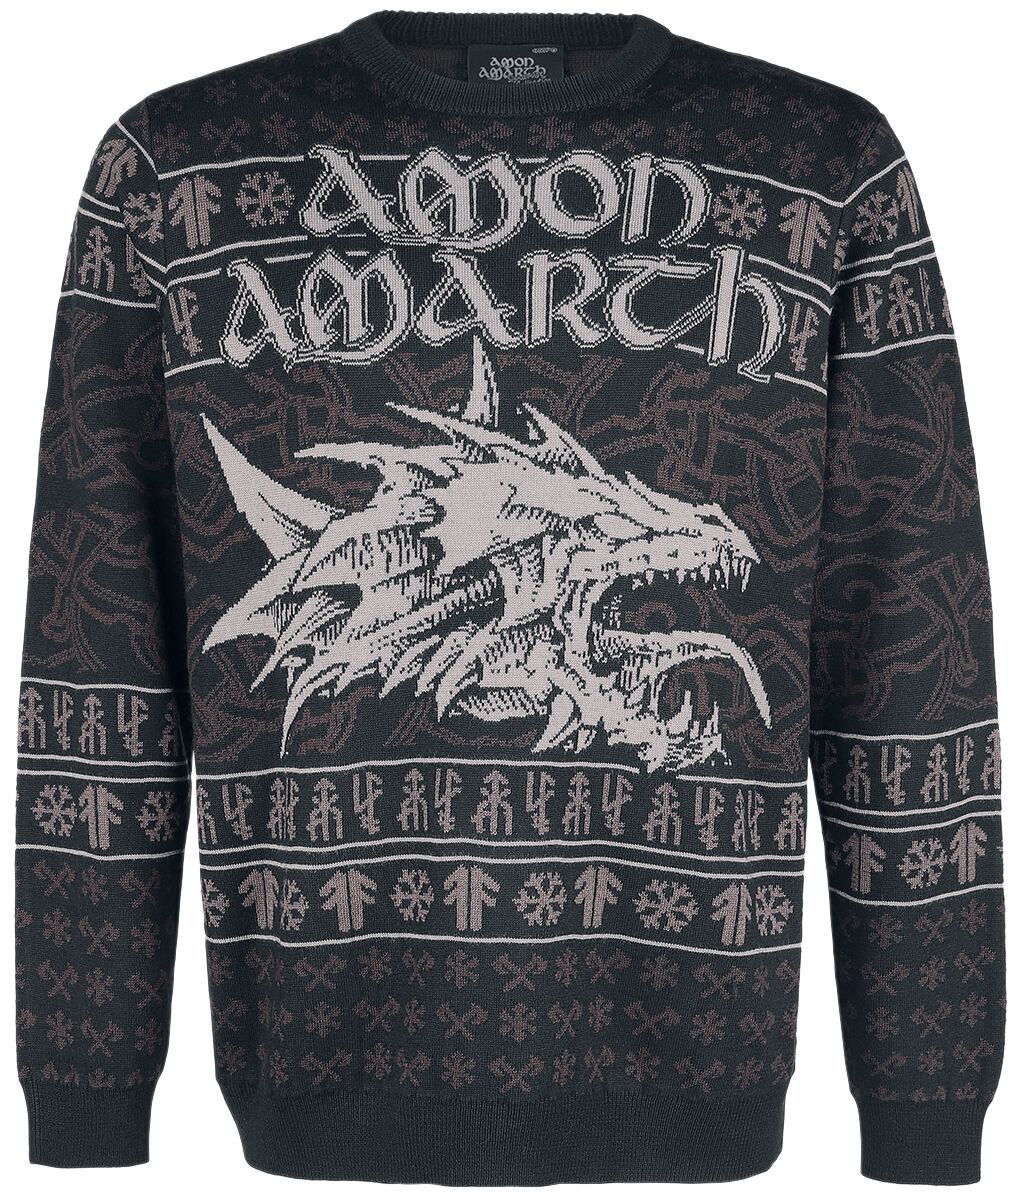 Image of Amon Amarth Holiday Sweater 2021 Strick-Sweater schwarz